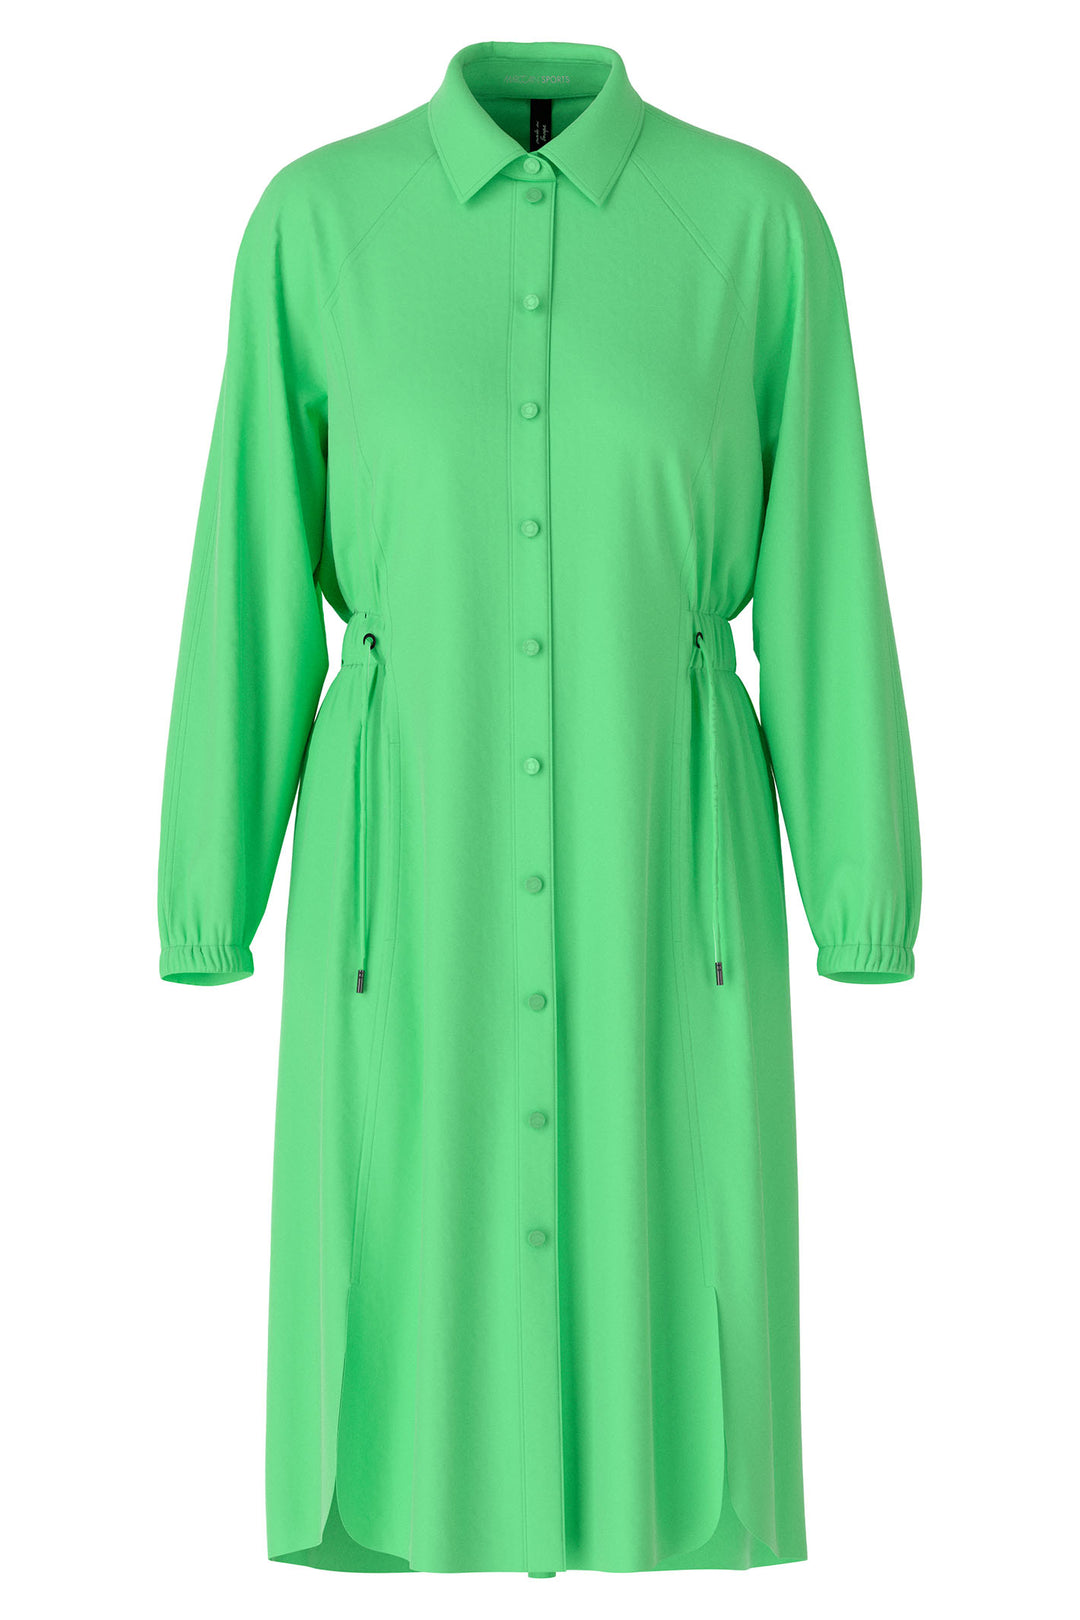 Marc Cain Sports WS 21.14 W28 543 New Neon Green Shirt Dress - Olivia Grace Fashion